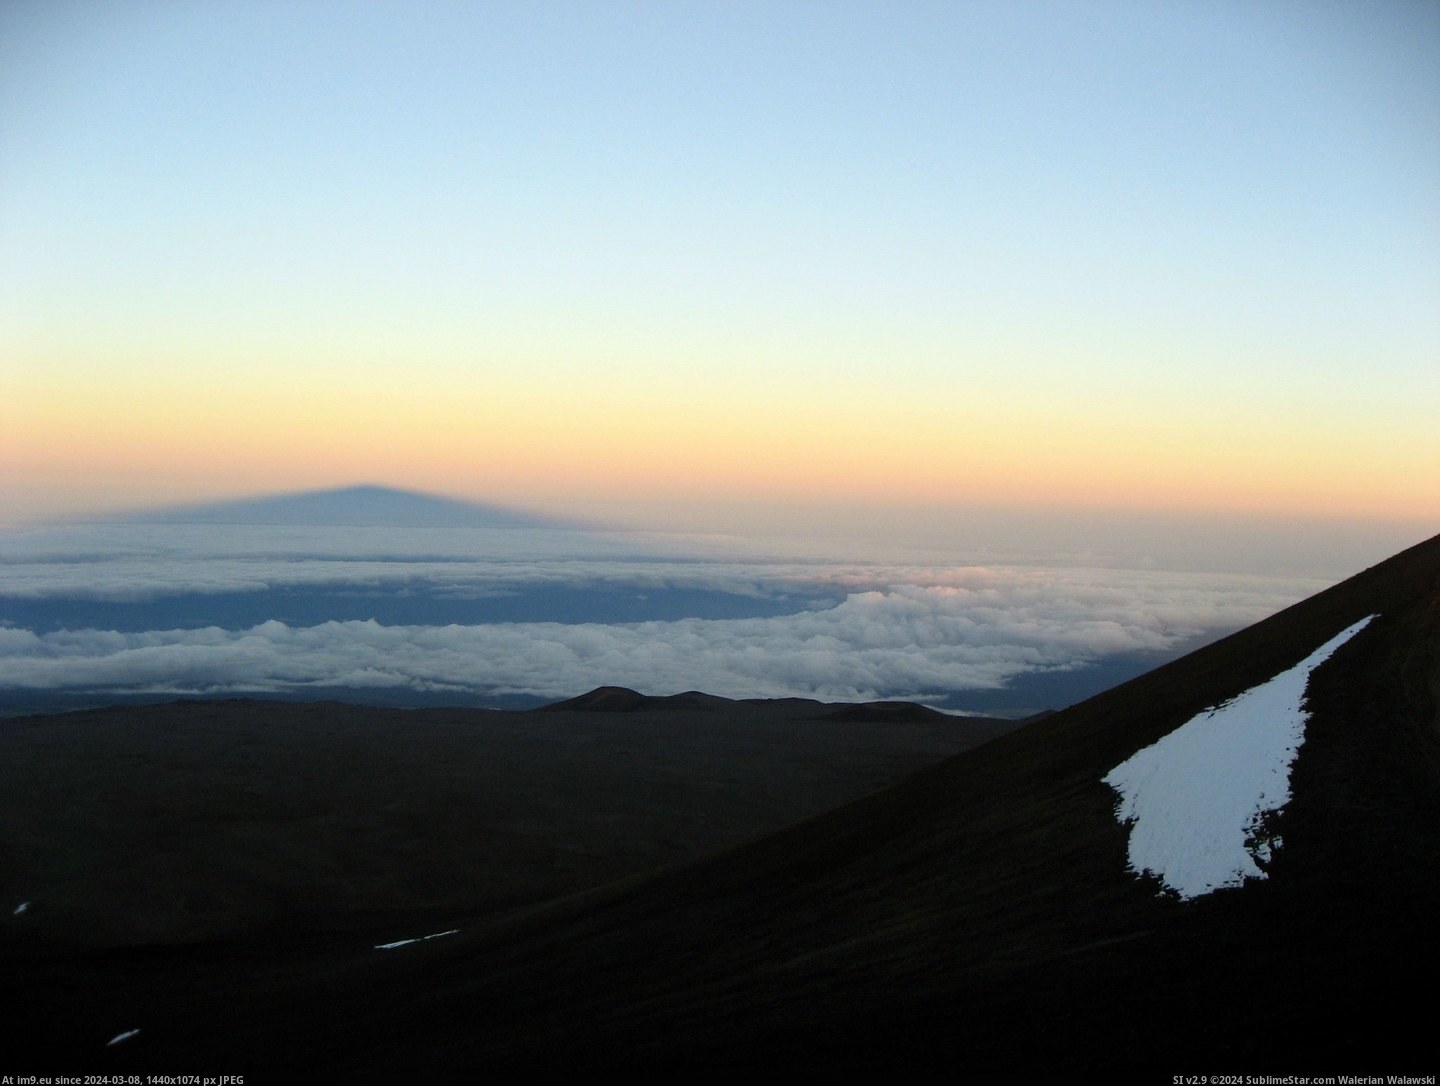 #Big #Island #Mountain #Why #Hilo #2816x2112 #Kea #Mauna #Hawaii #Spring #Yes #Shadow [Earthporn] Why yes, I have seen a mountain shadow [2816x2112] [OC] - Mauna Kea's shadow over Hilo, Big Island, Hawaii, spring 2 Pic. (Изображение из альбом My r/EARTHPORN favs))